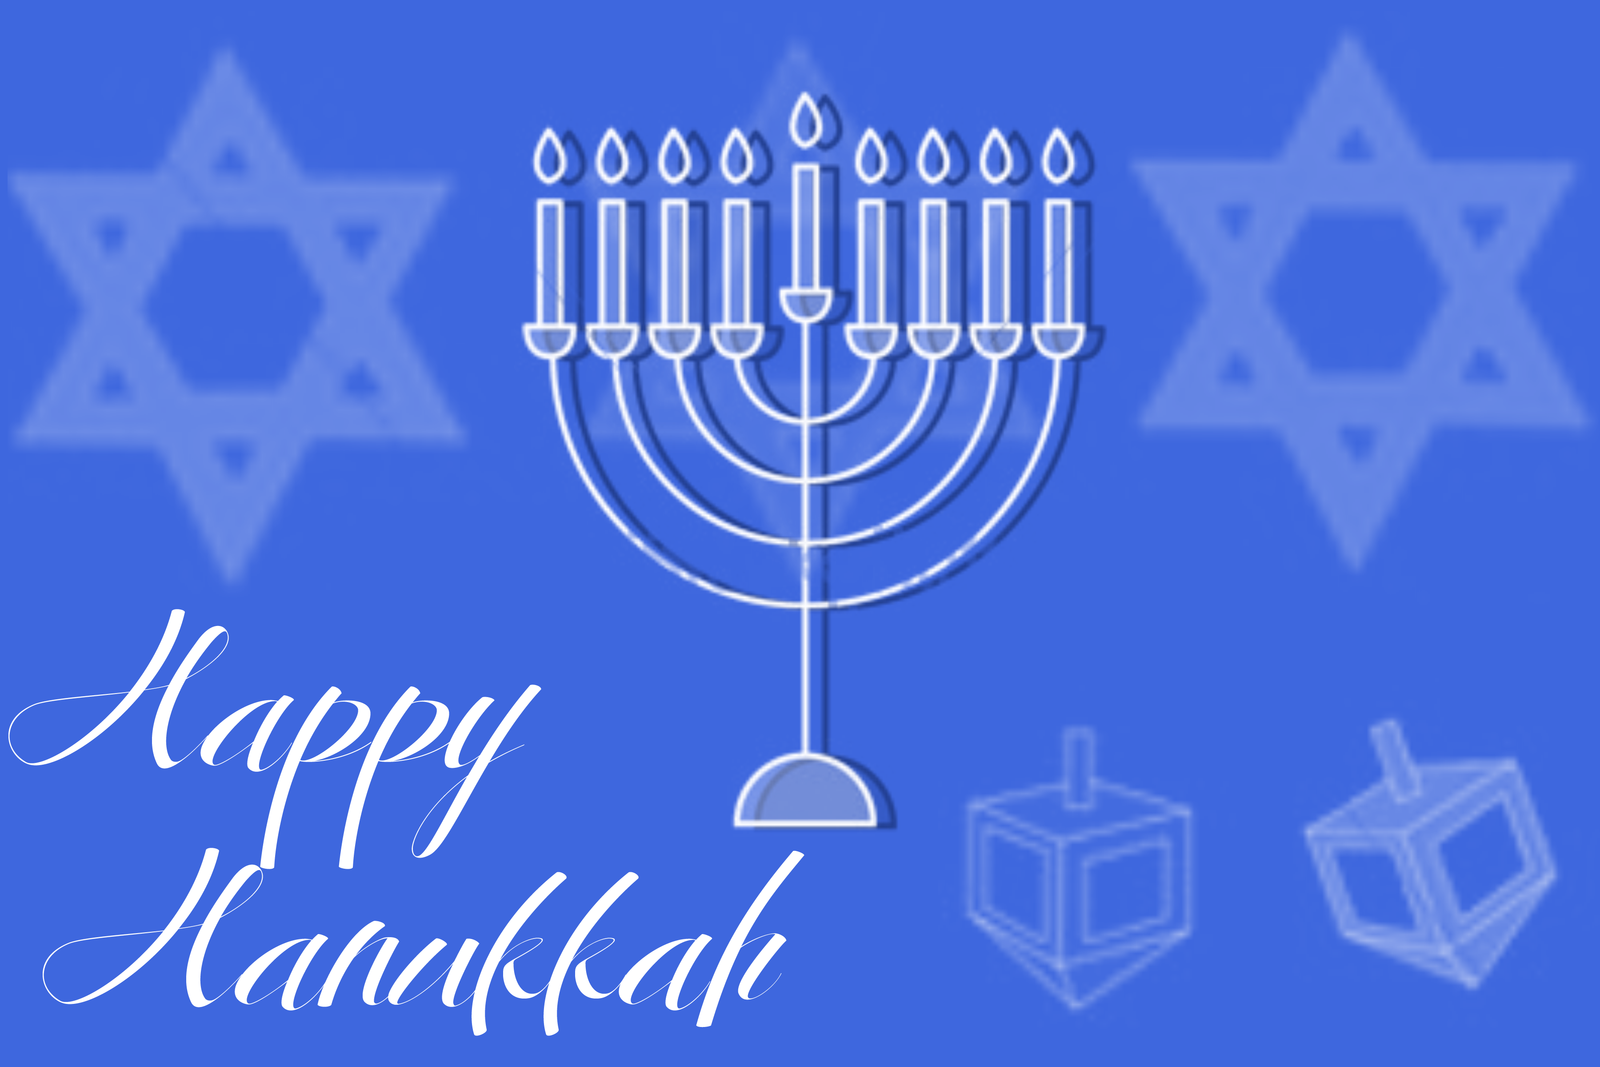 Happy Hanukkah Wishes Hanukkah Wishes Greetings Pictures